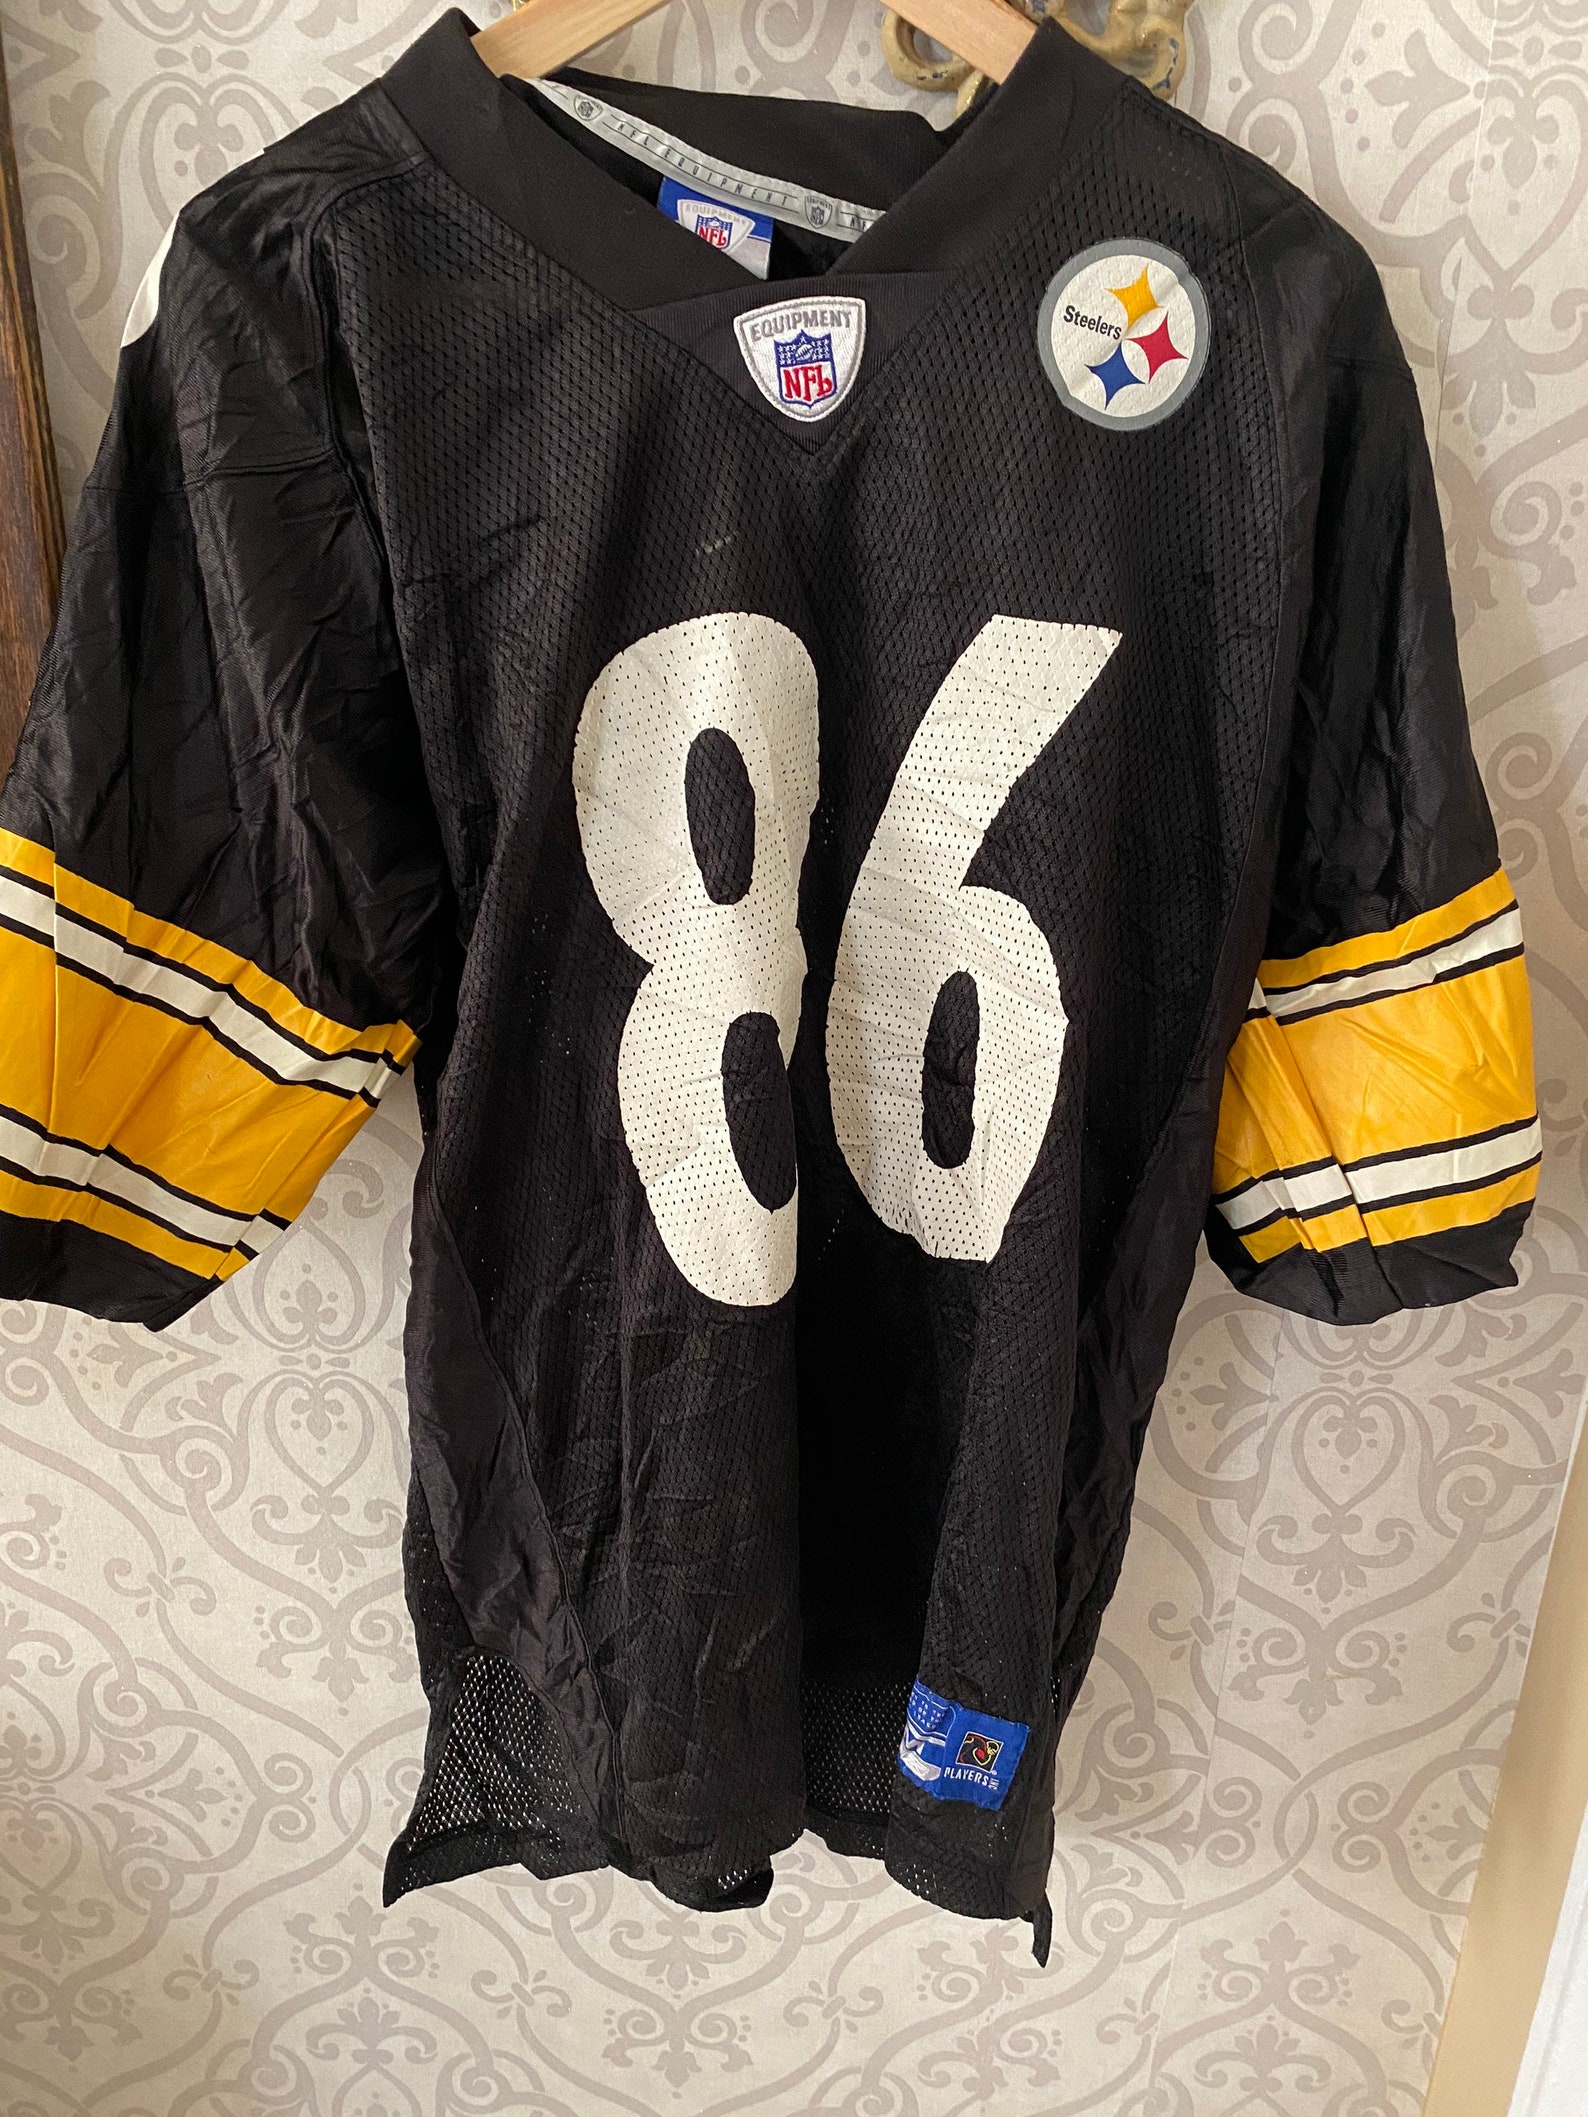 Mens vintage Steelers football jersey | Etsy